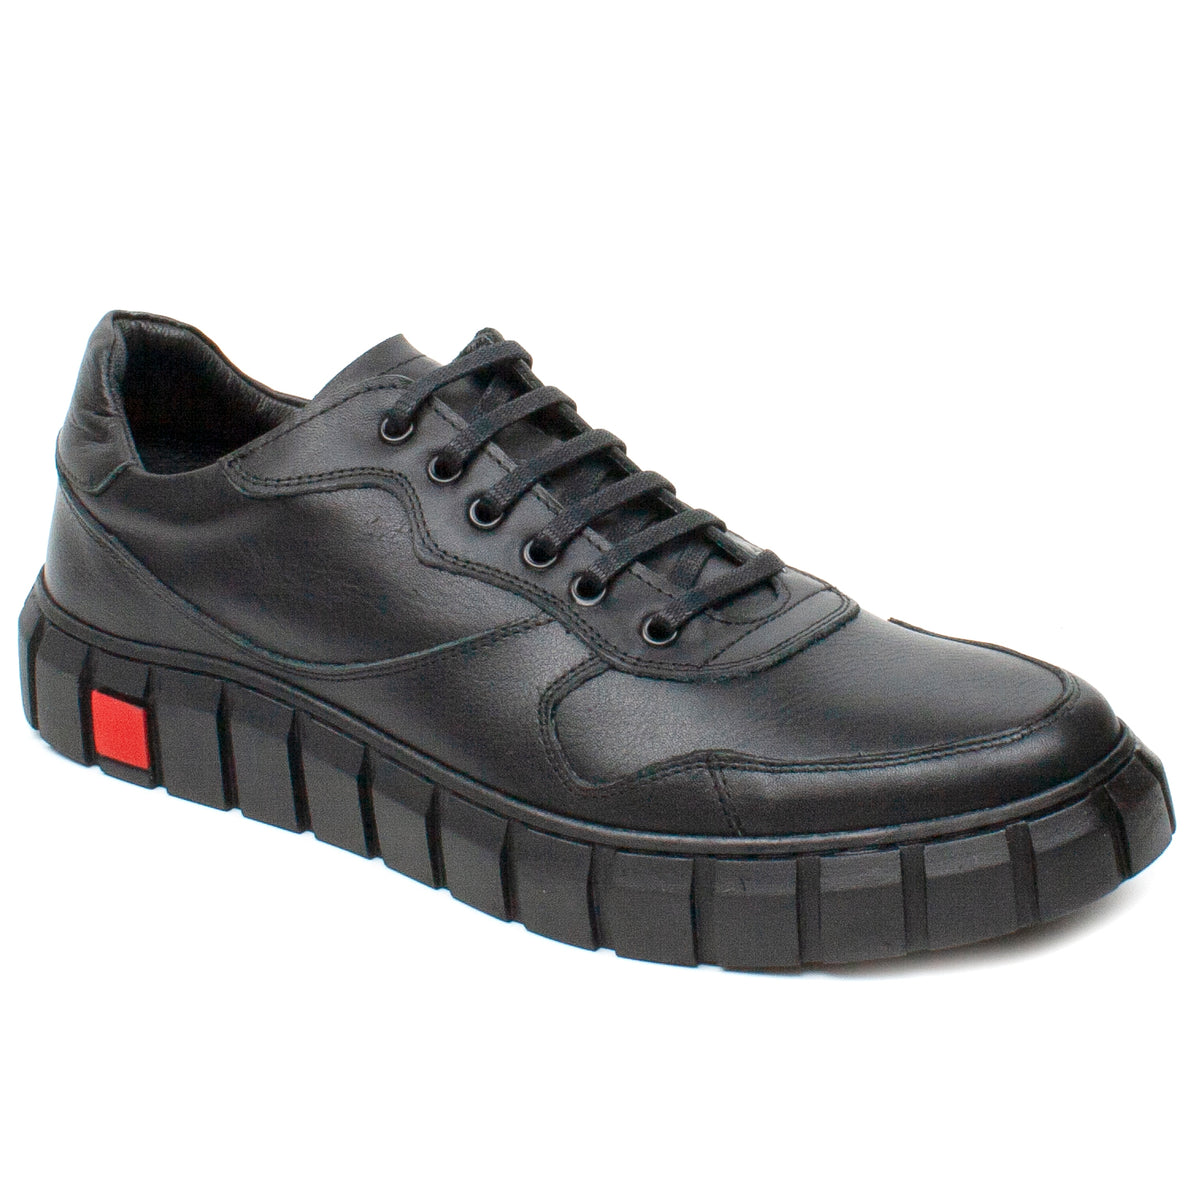 Caspian Pantofi barbati 905 negru IB2184-NG